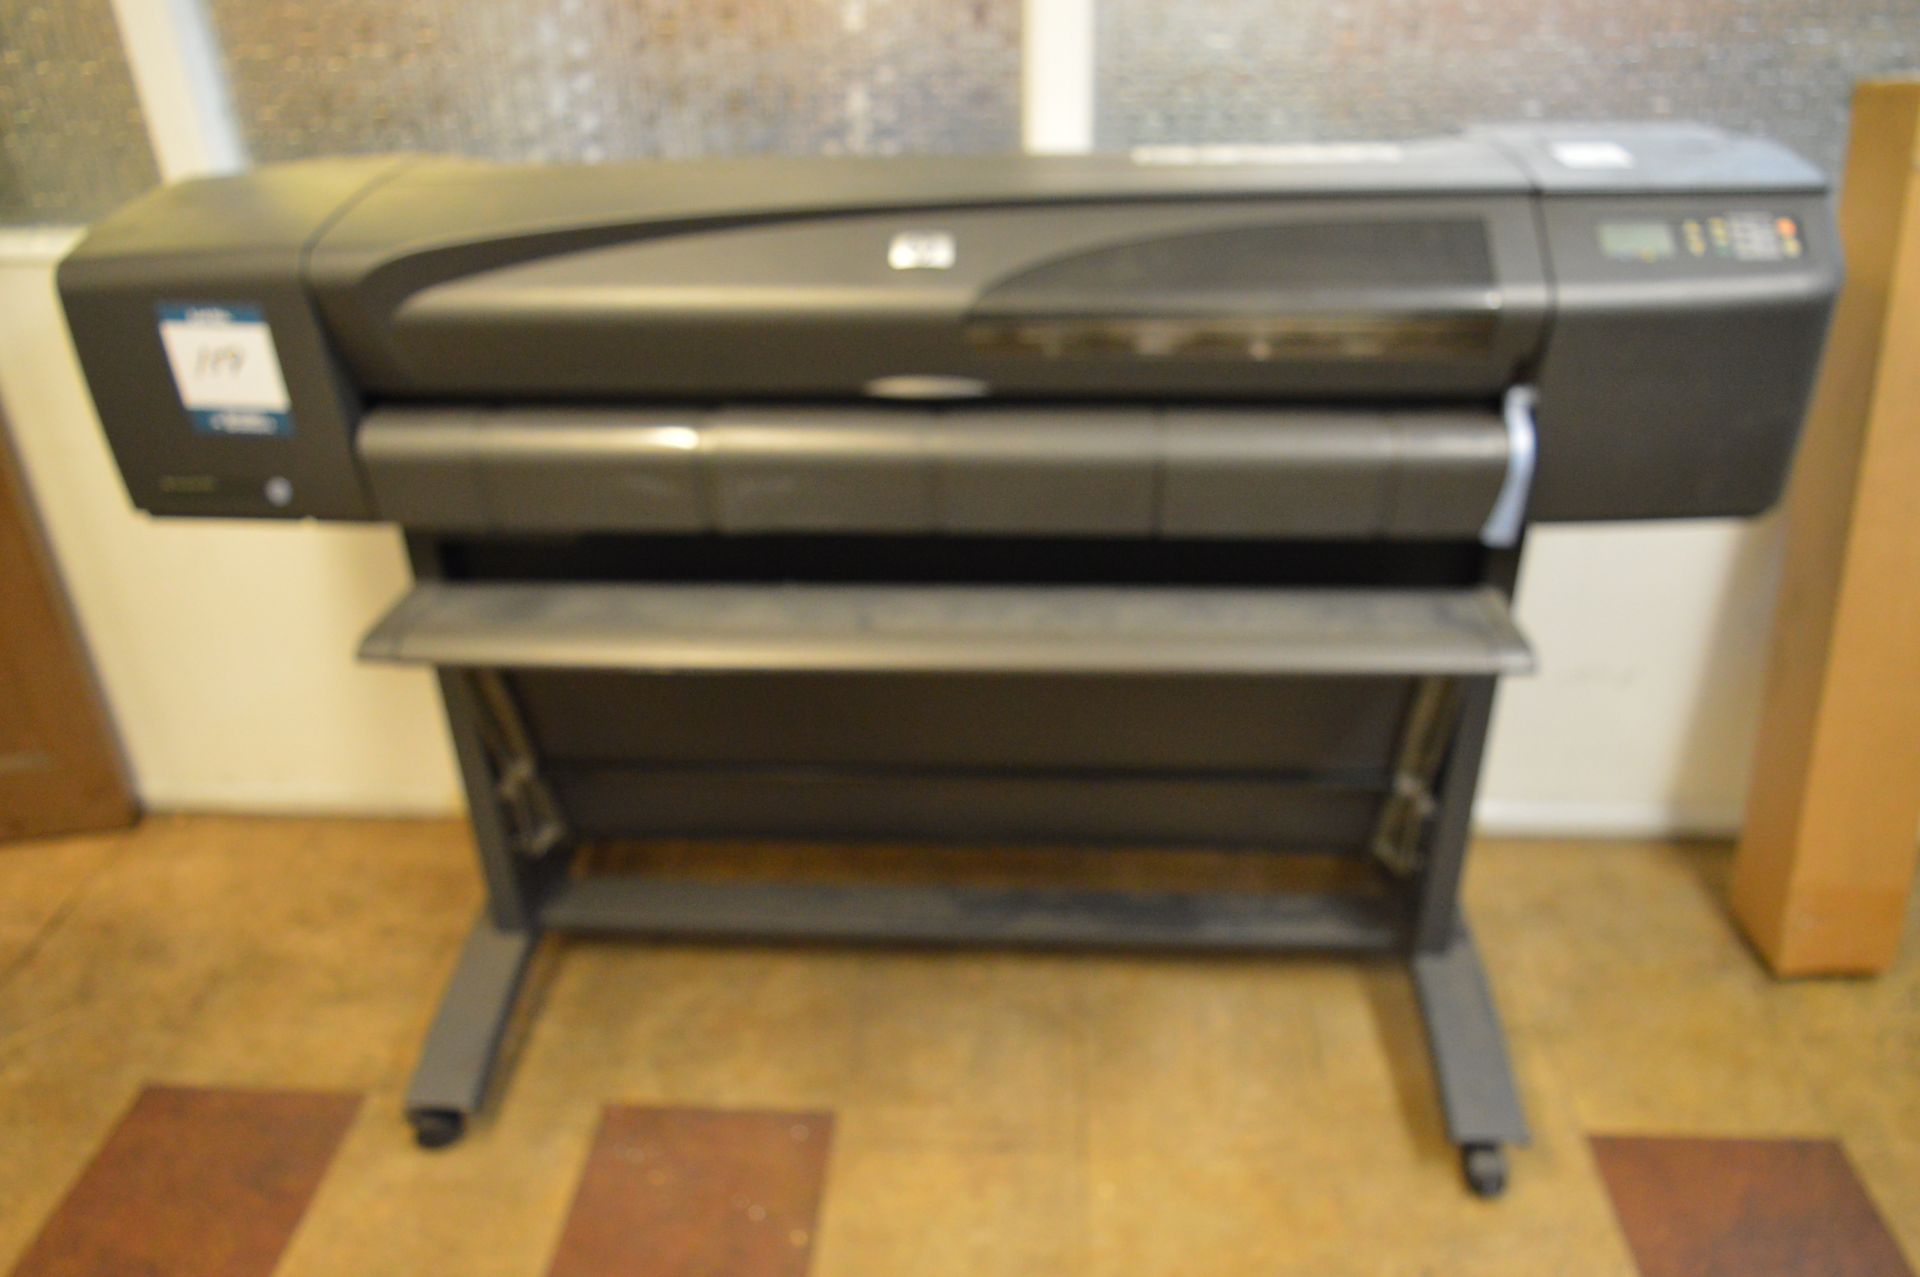 Hewlett Packard, Designjet 800, Model: C7780B colour plotter printer, Serial No. SG41U62031